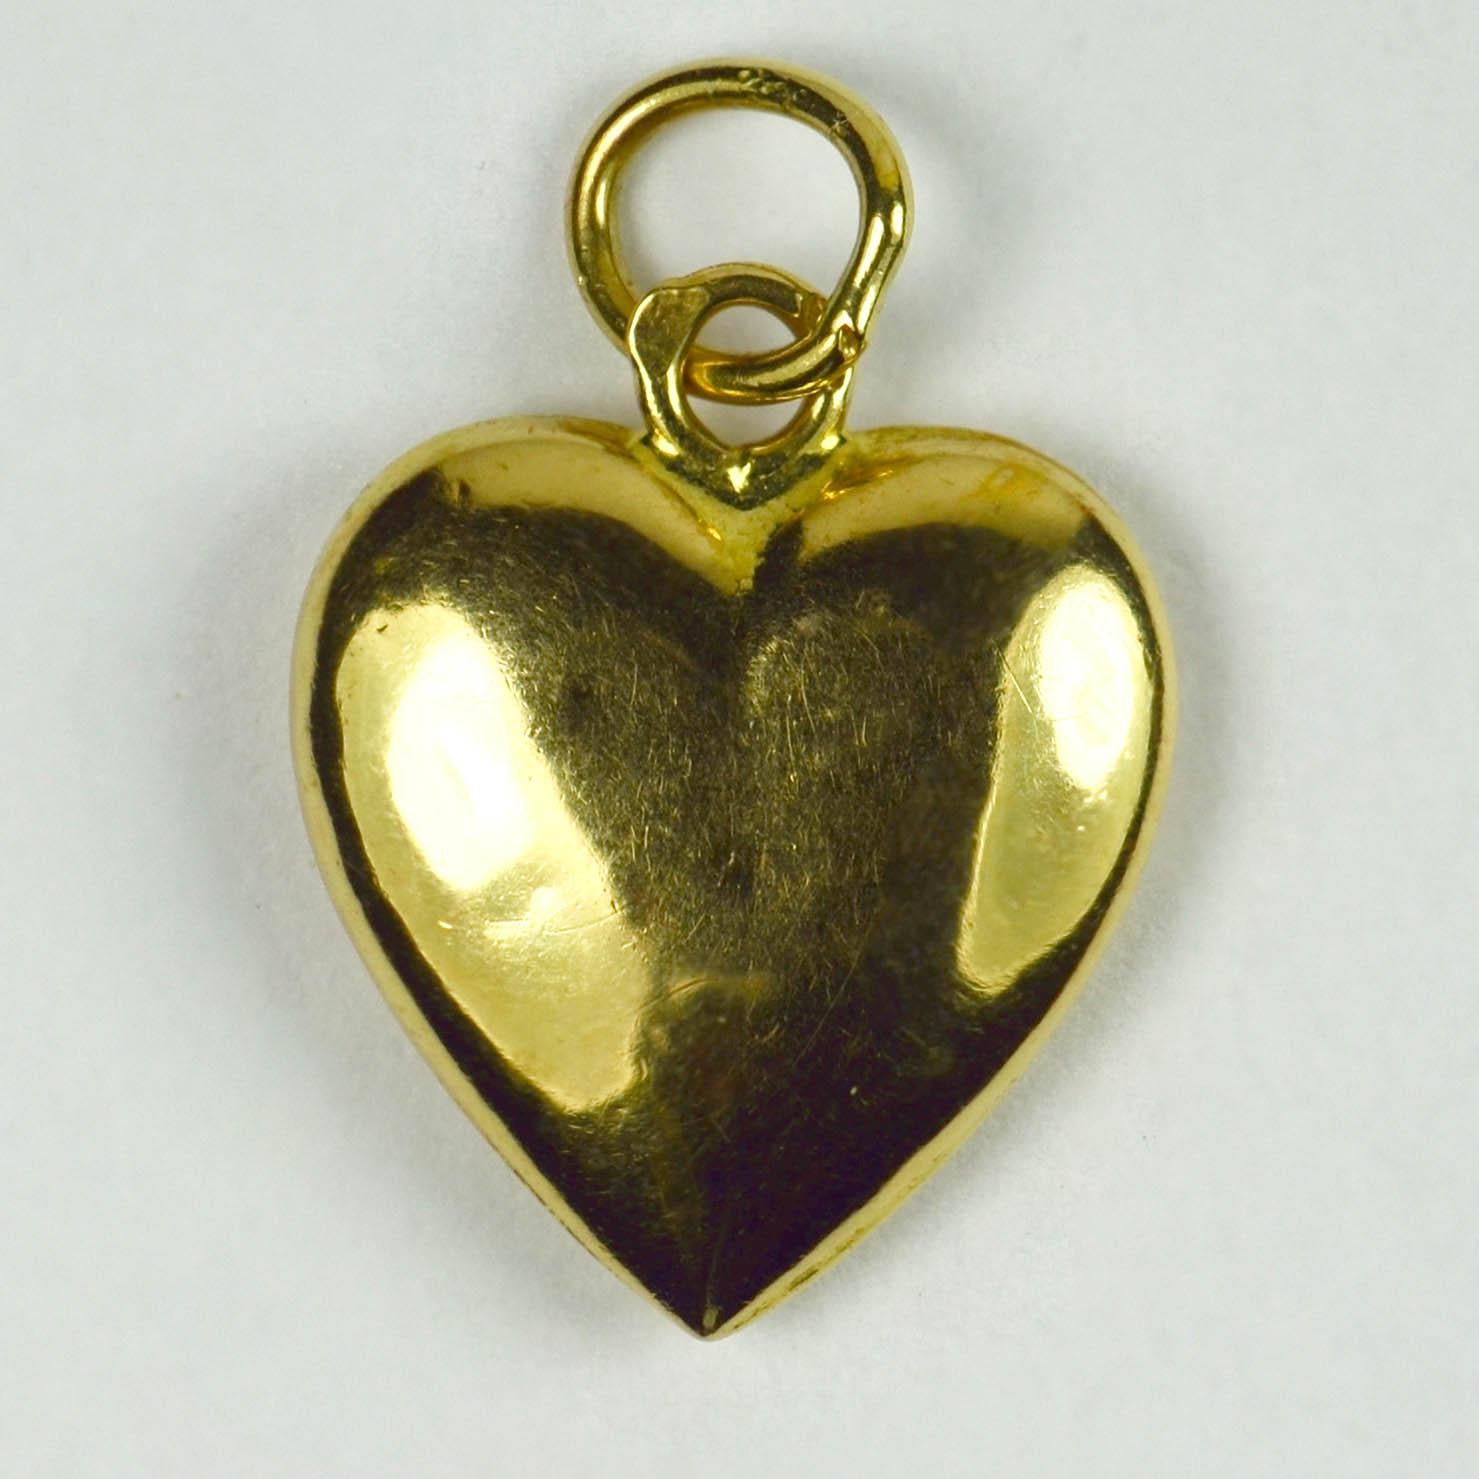 French 18 Karat Yellow Gold Puffy Heart Charm Pendant 2